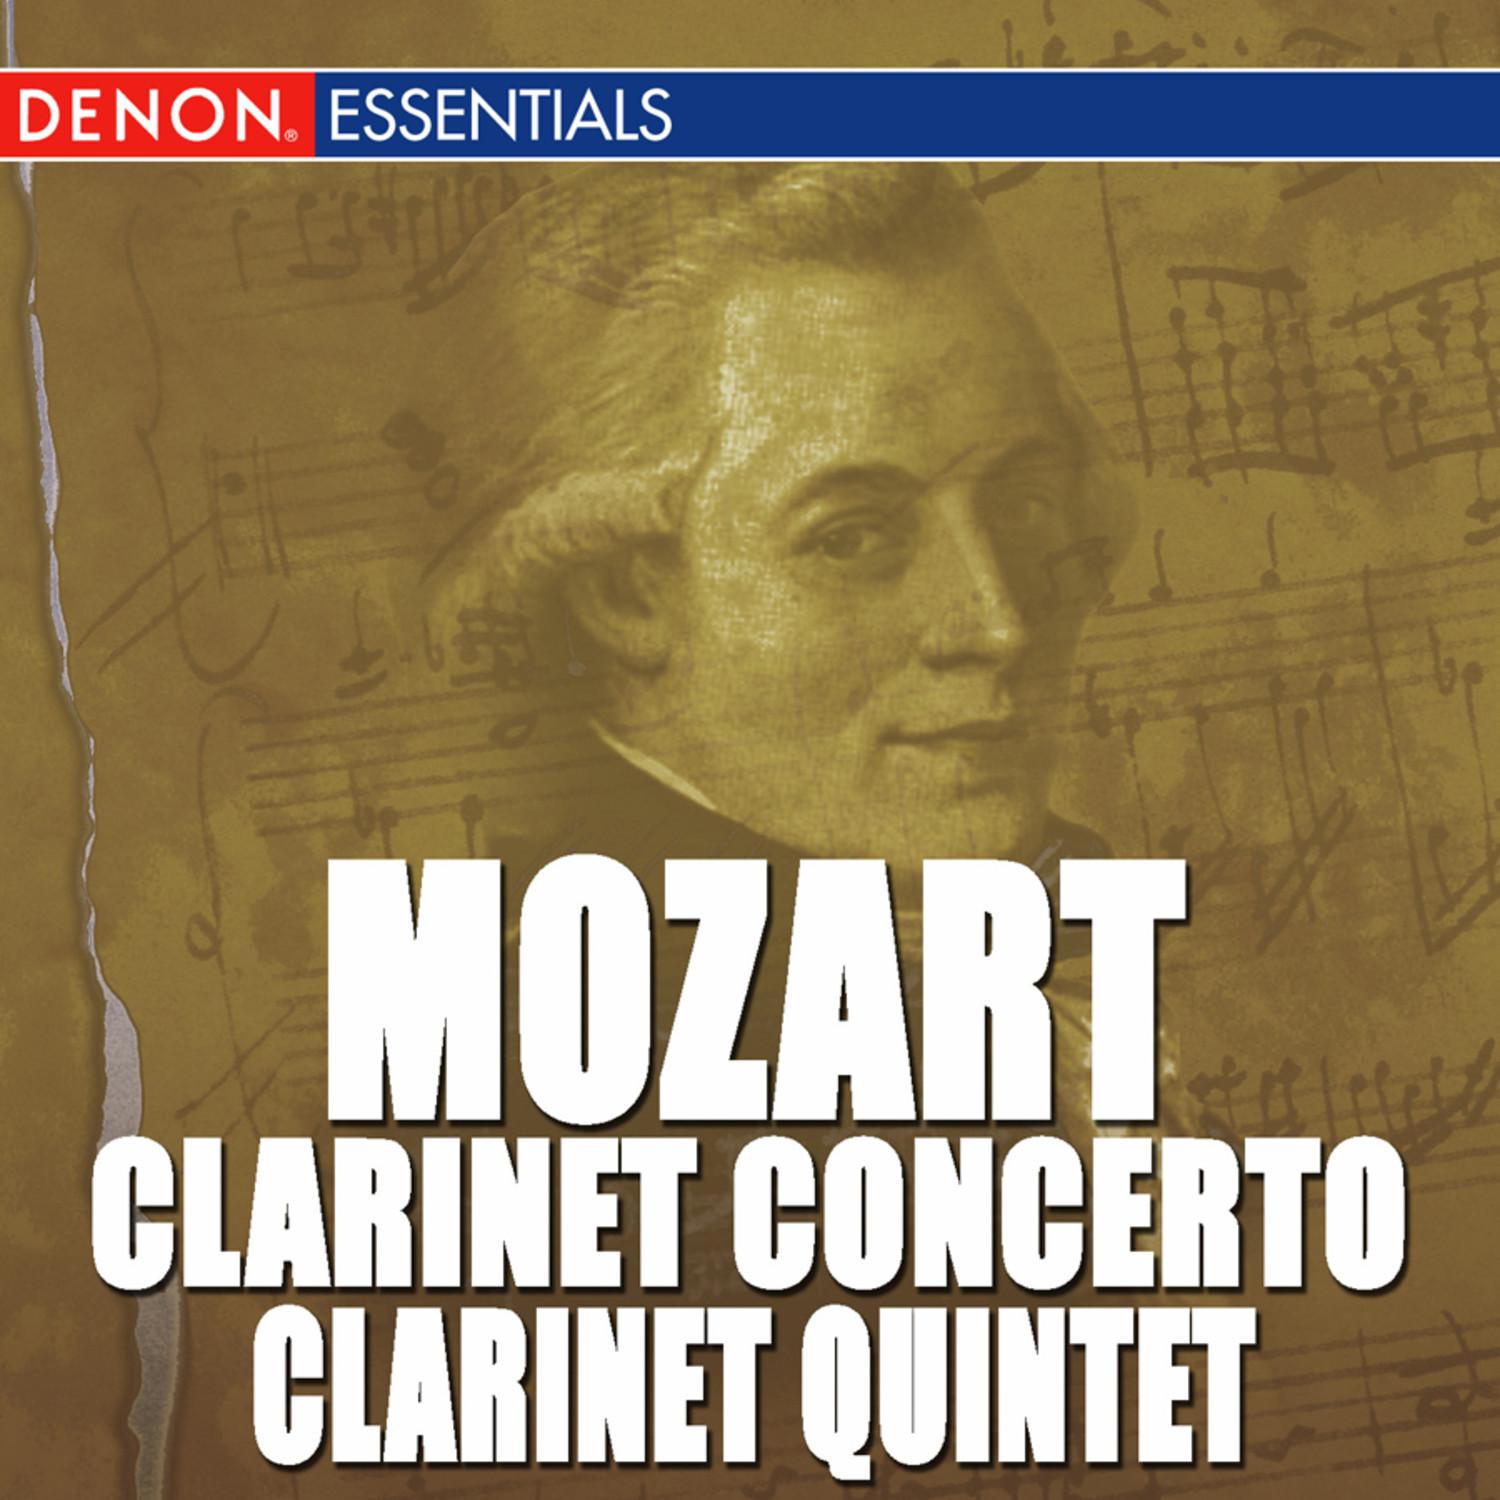 Clarinet Concerto in A Major, K. 622: I. Allegro